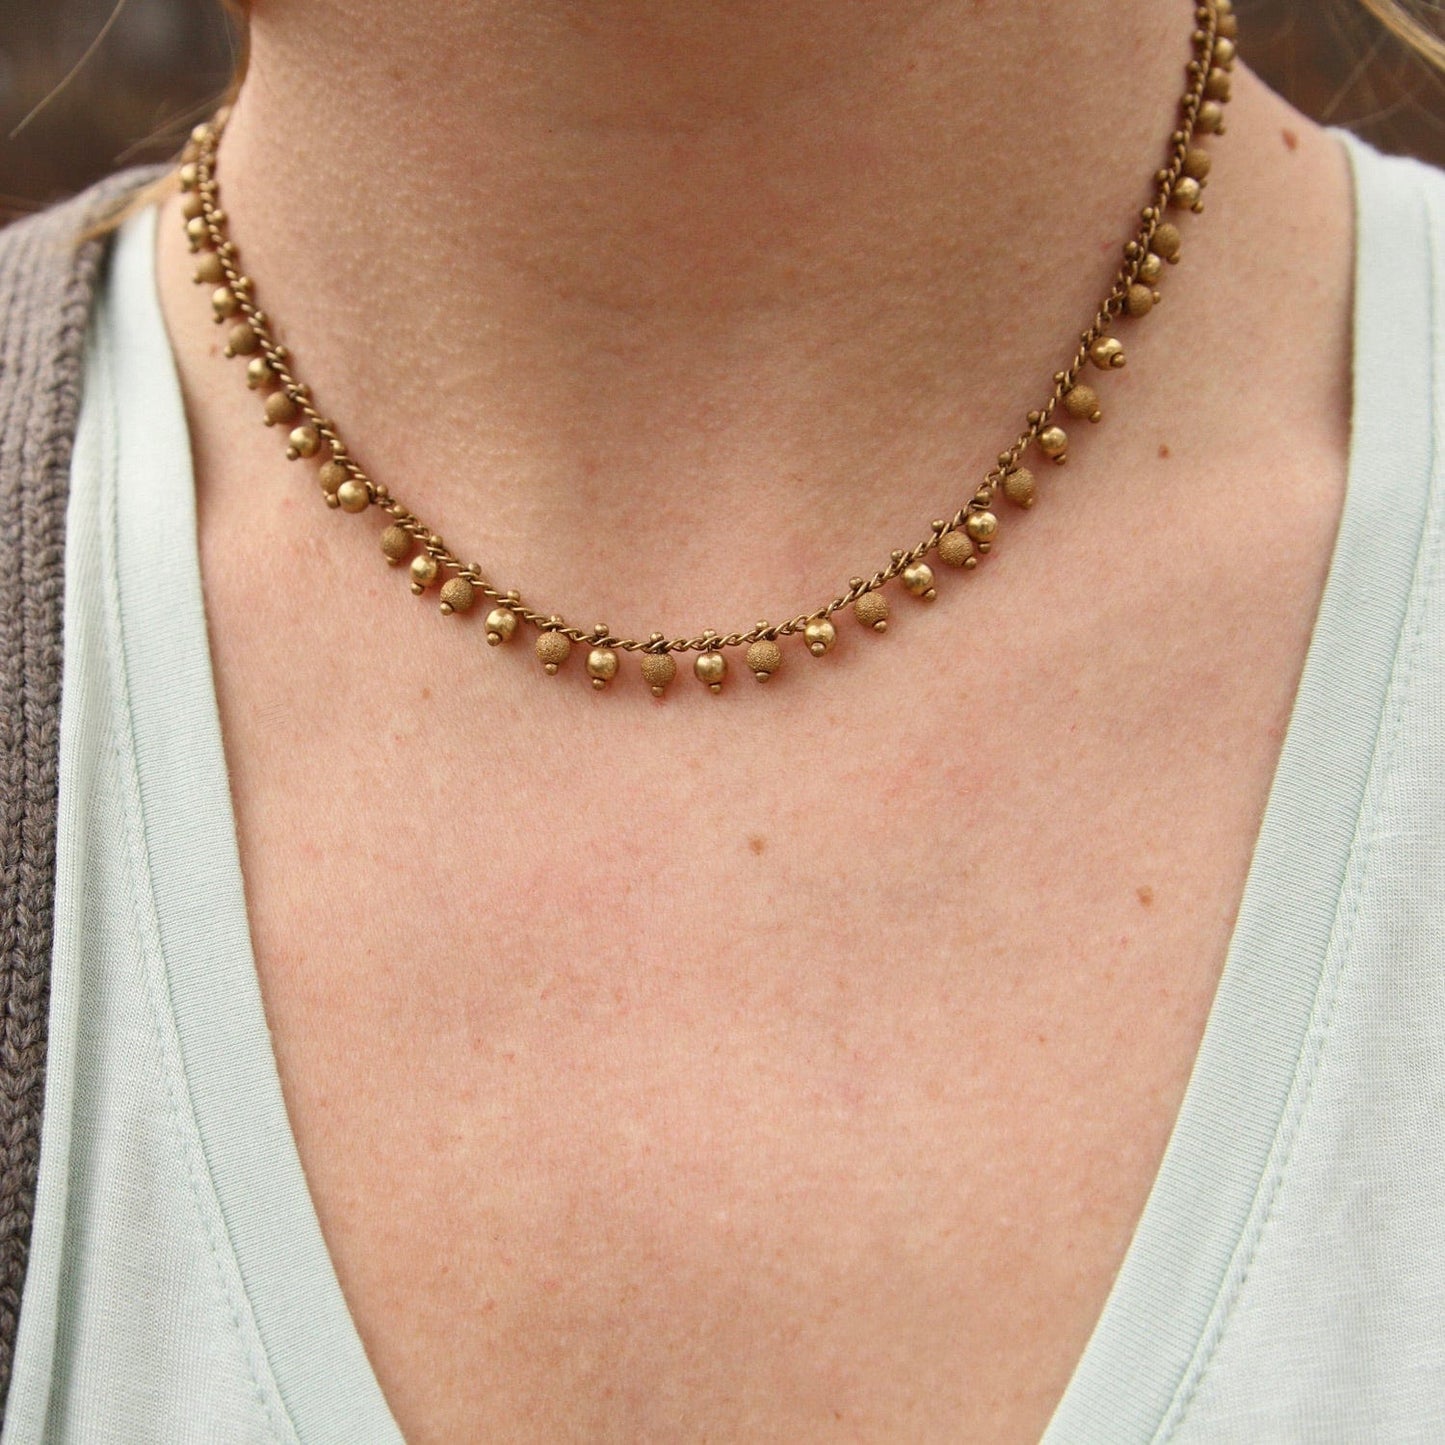 NKL-JM Bead Fringe Chain Necklace-Gold Plate